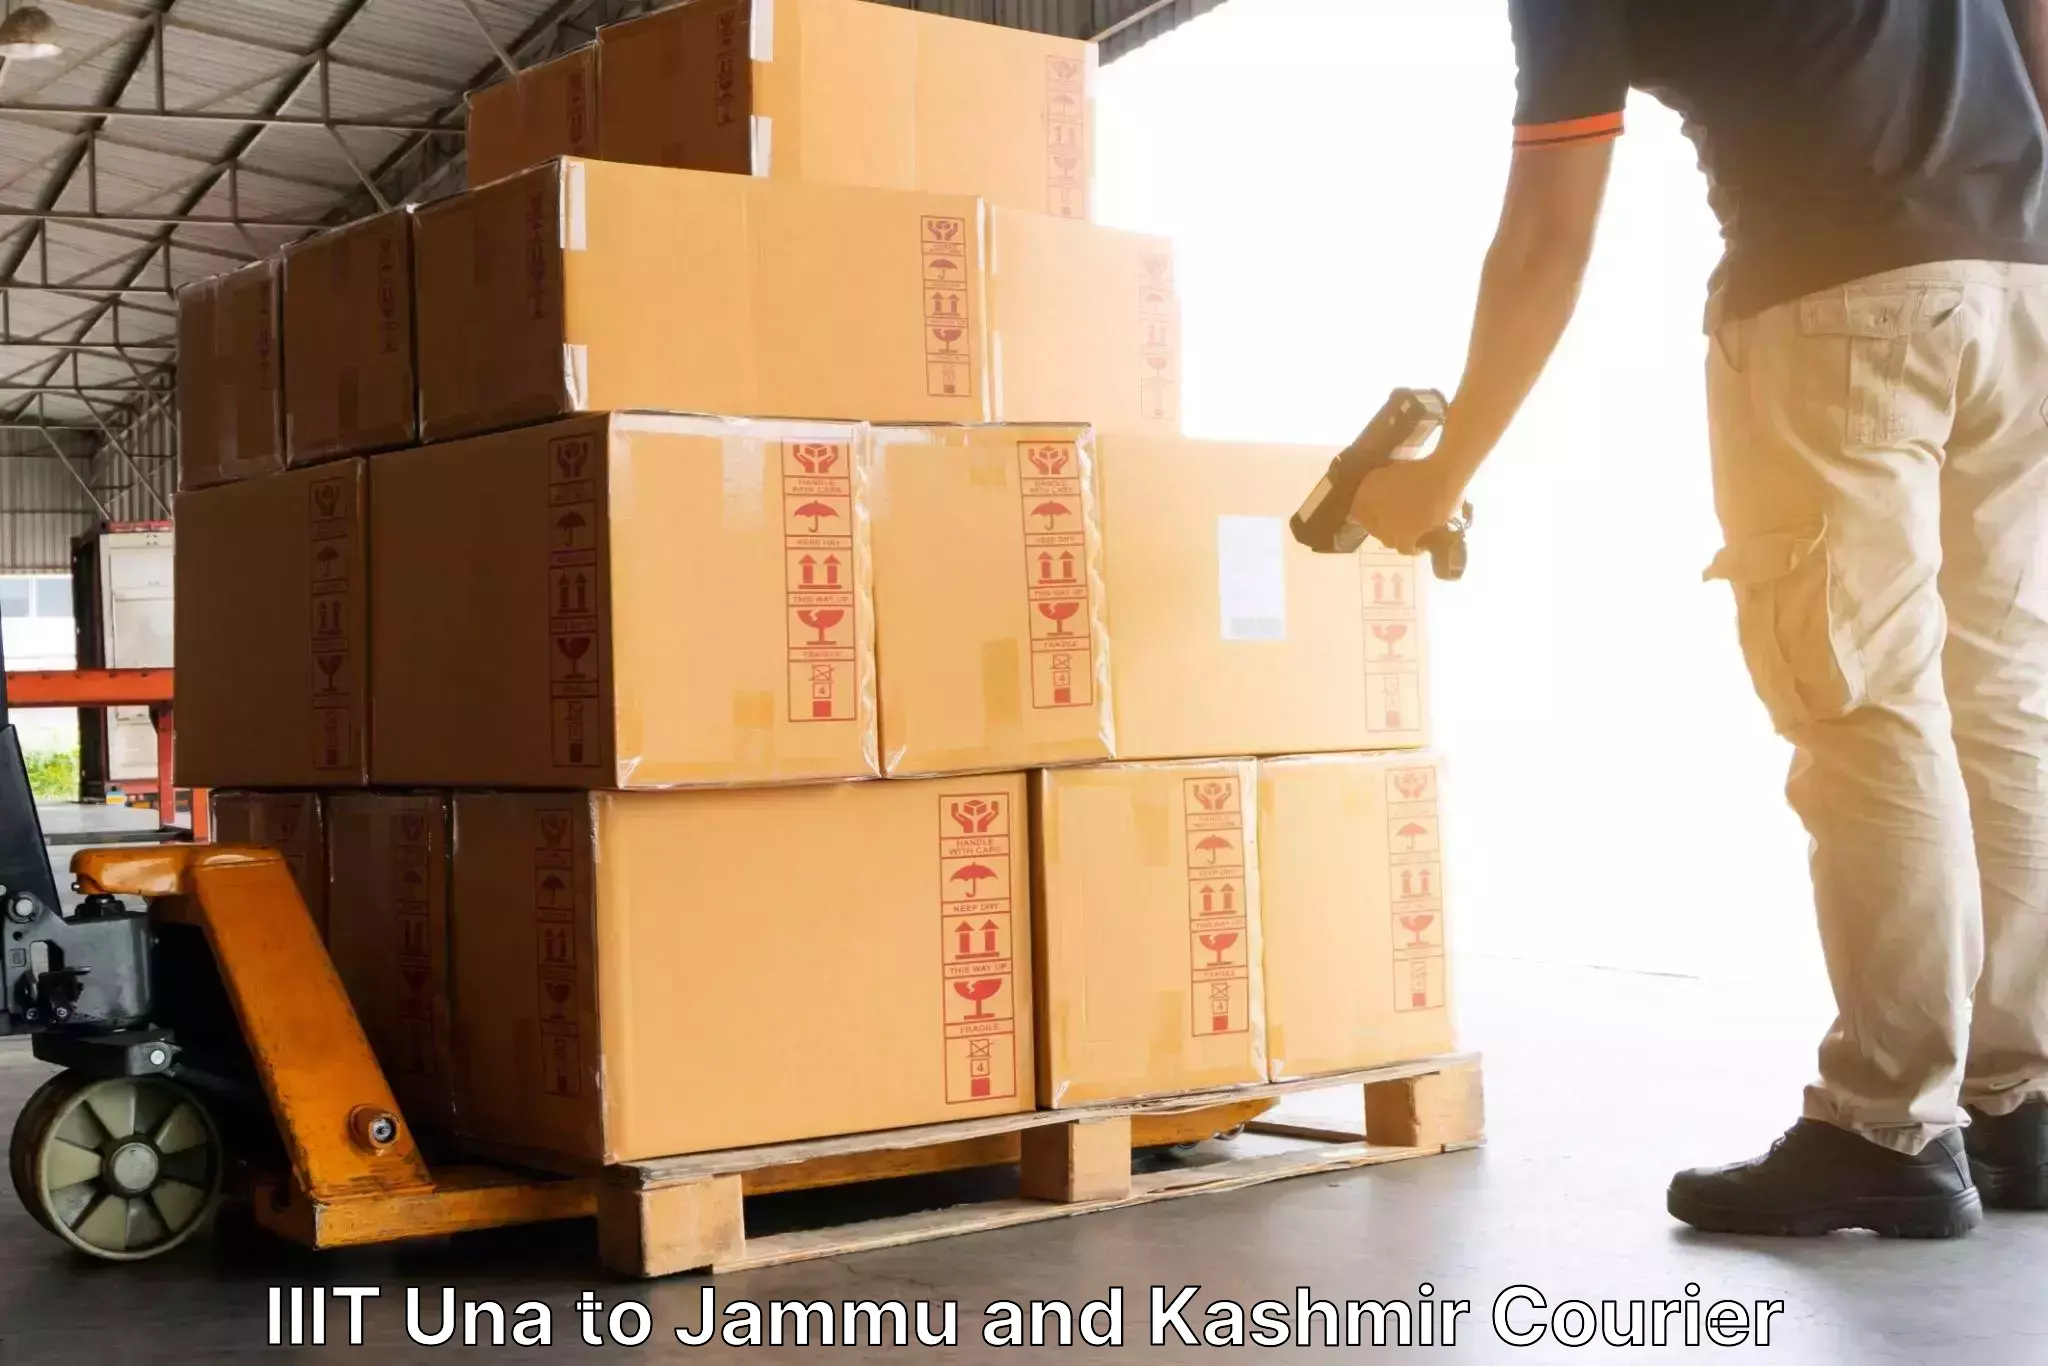 Courier service booking IIIT Una to University of Jammu